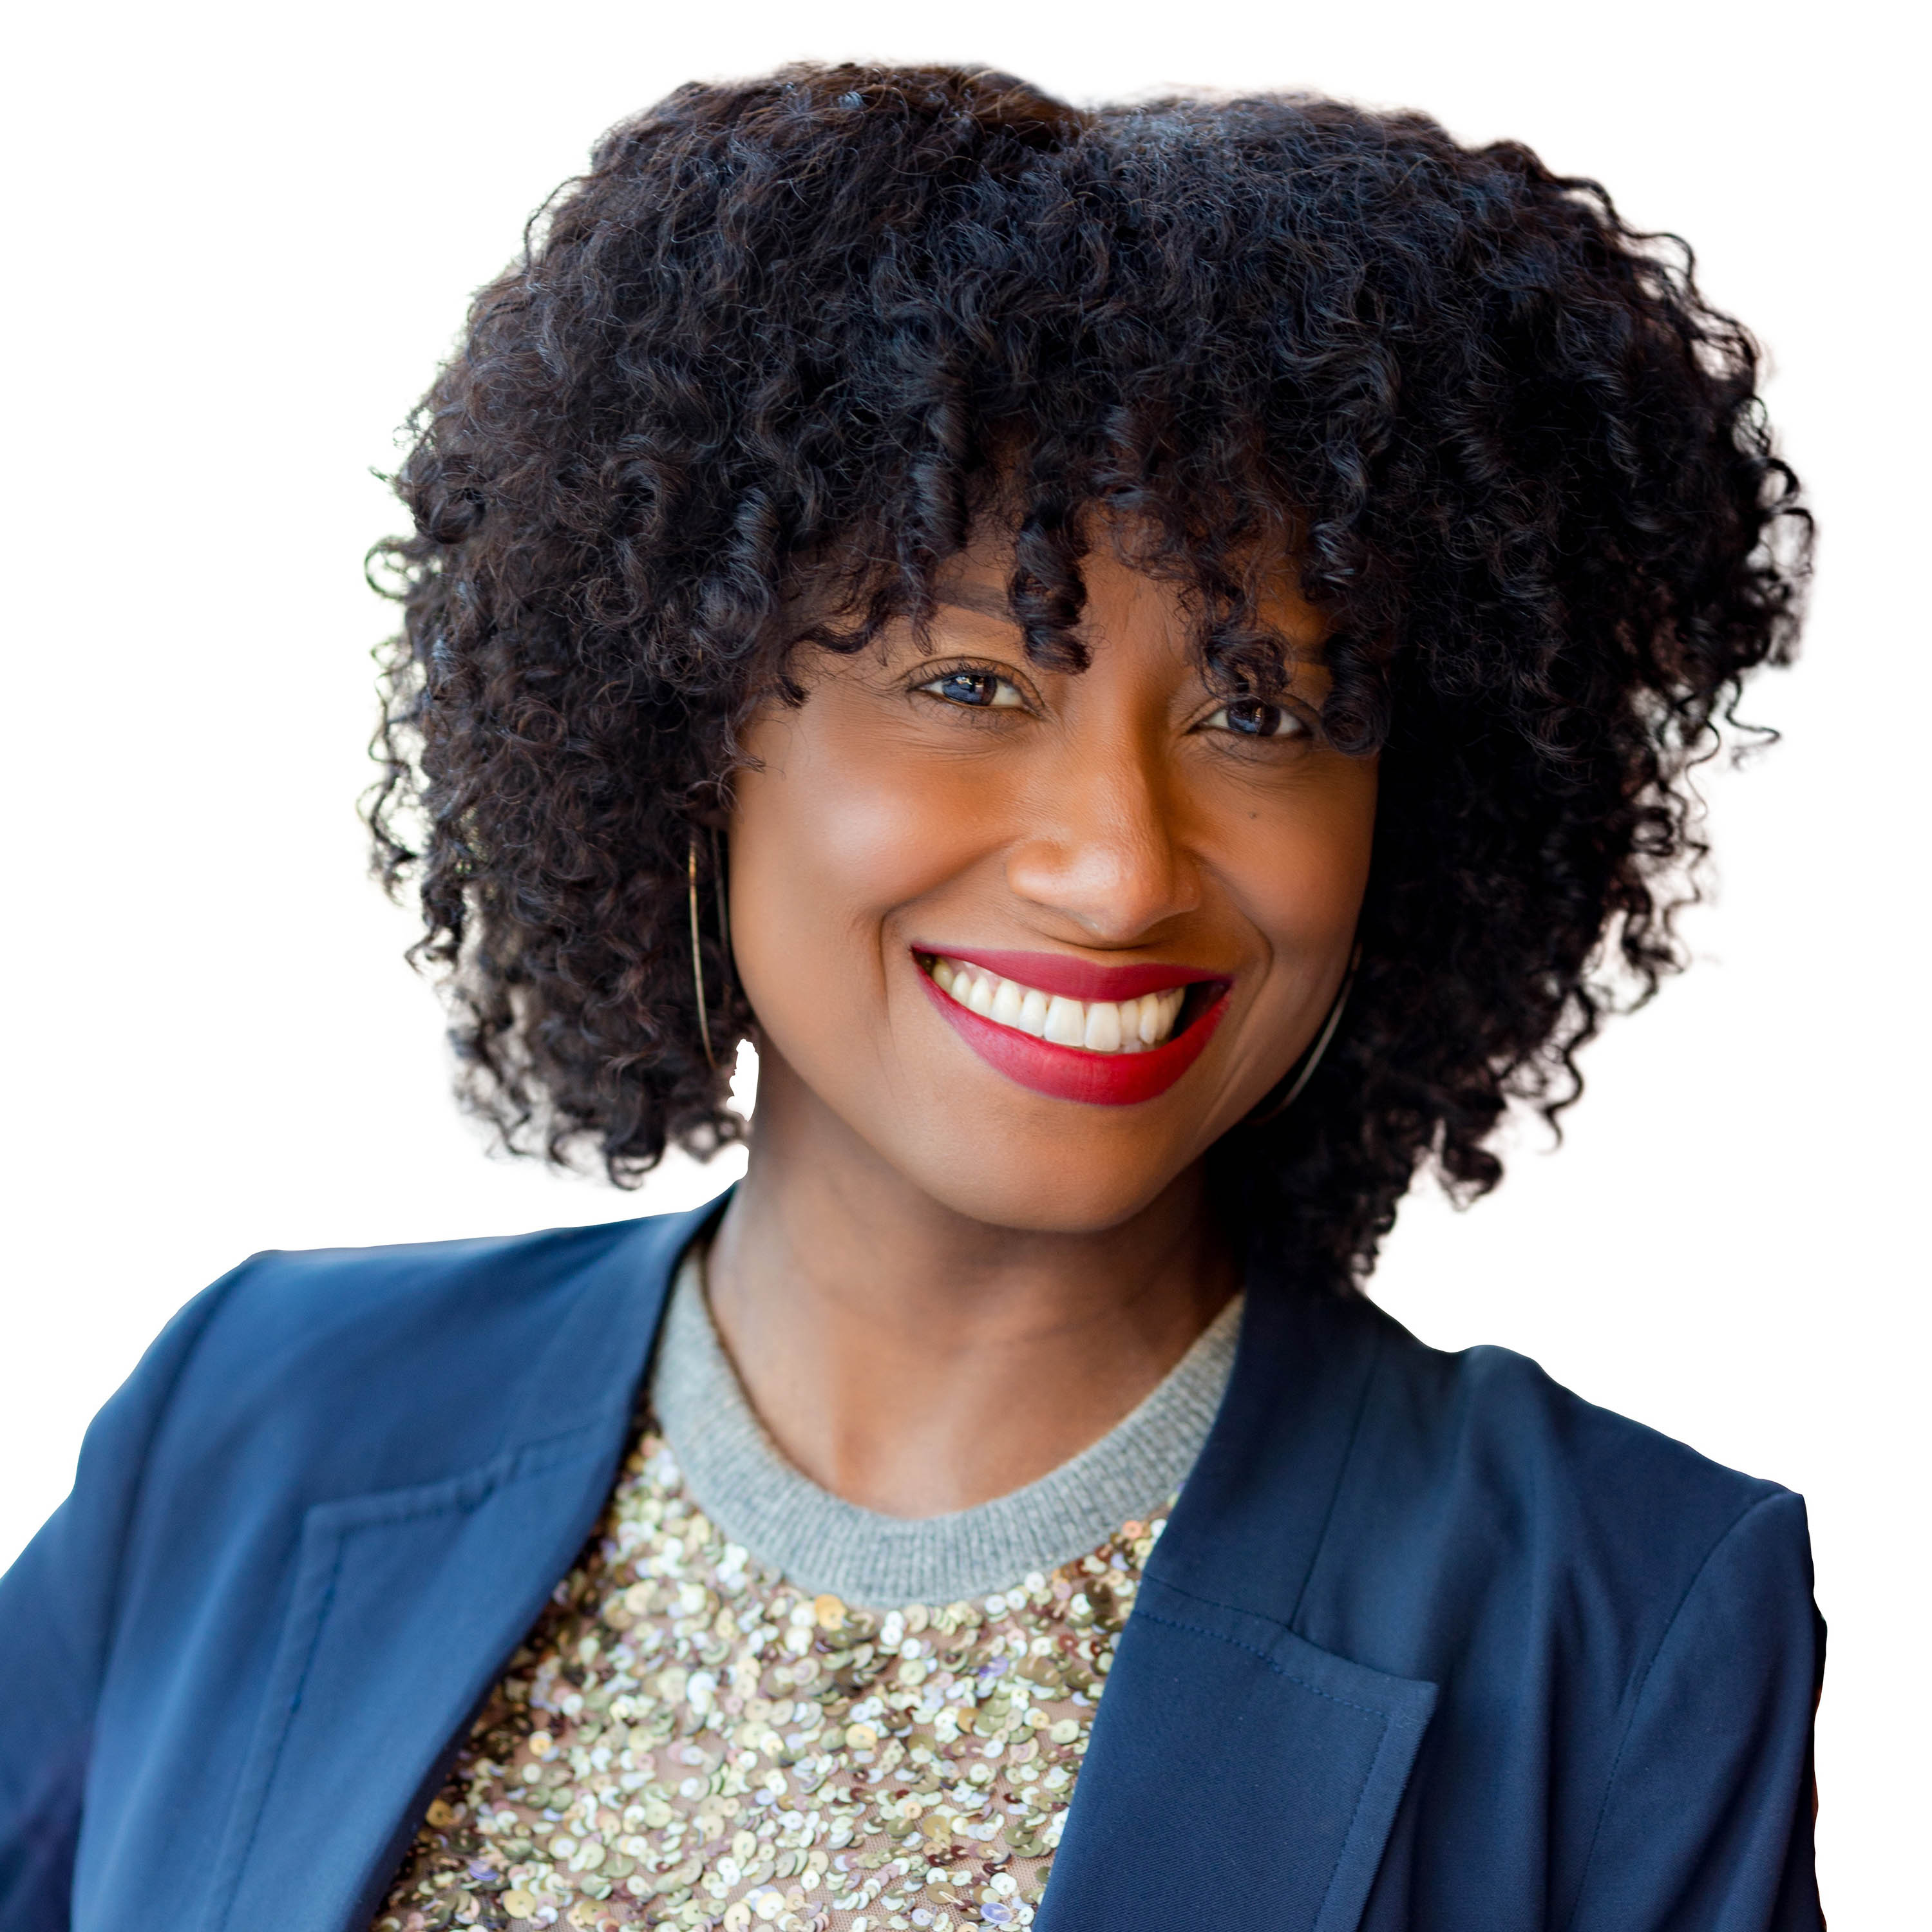 Dr. Tarika Barrett, incoming CEO of Girls Who Code.